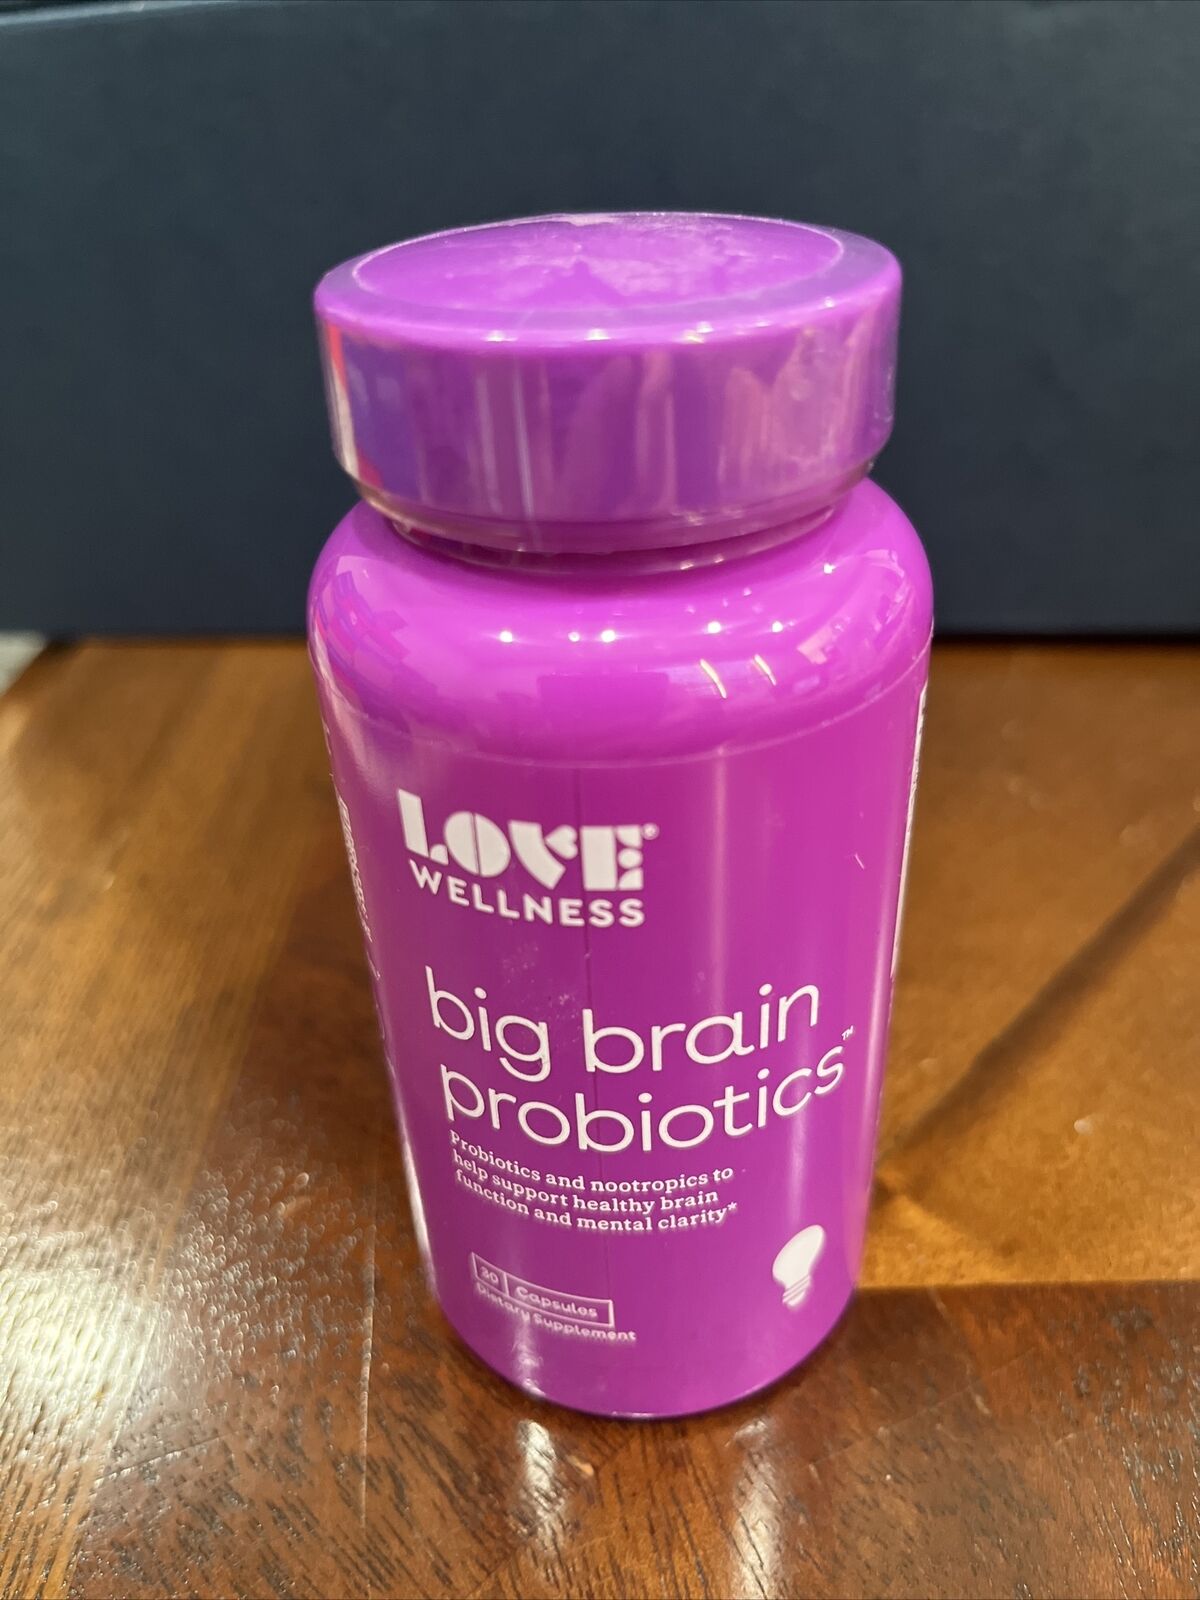 Love Wellness Big Brain Probiotics Nootropics Brain Exp8/24, On Amazon $29.99